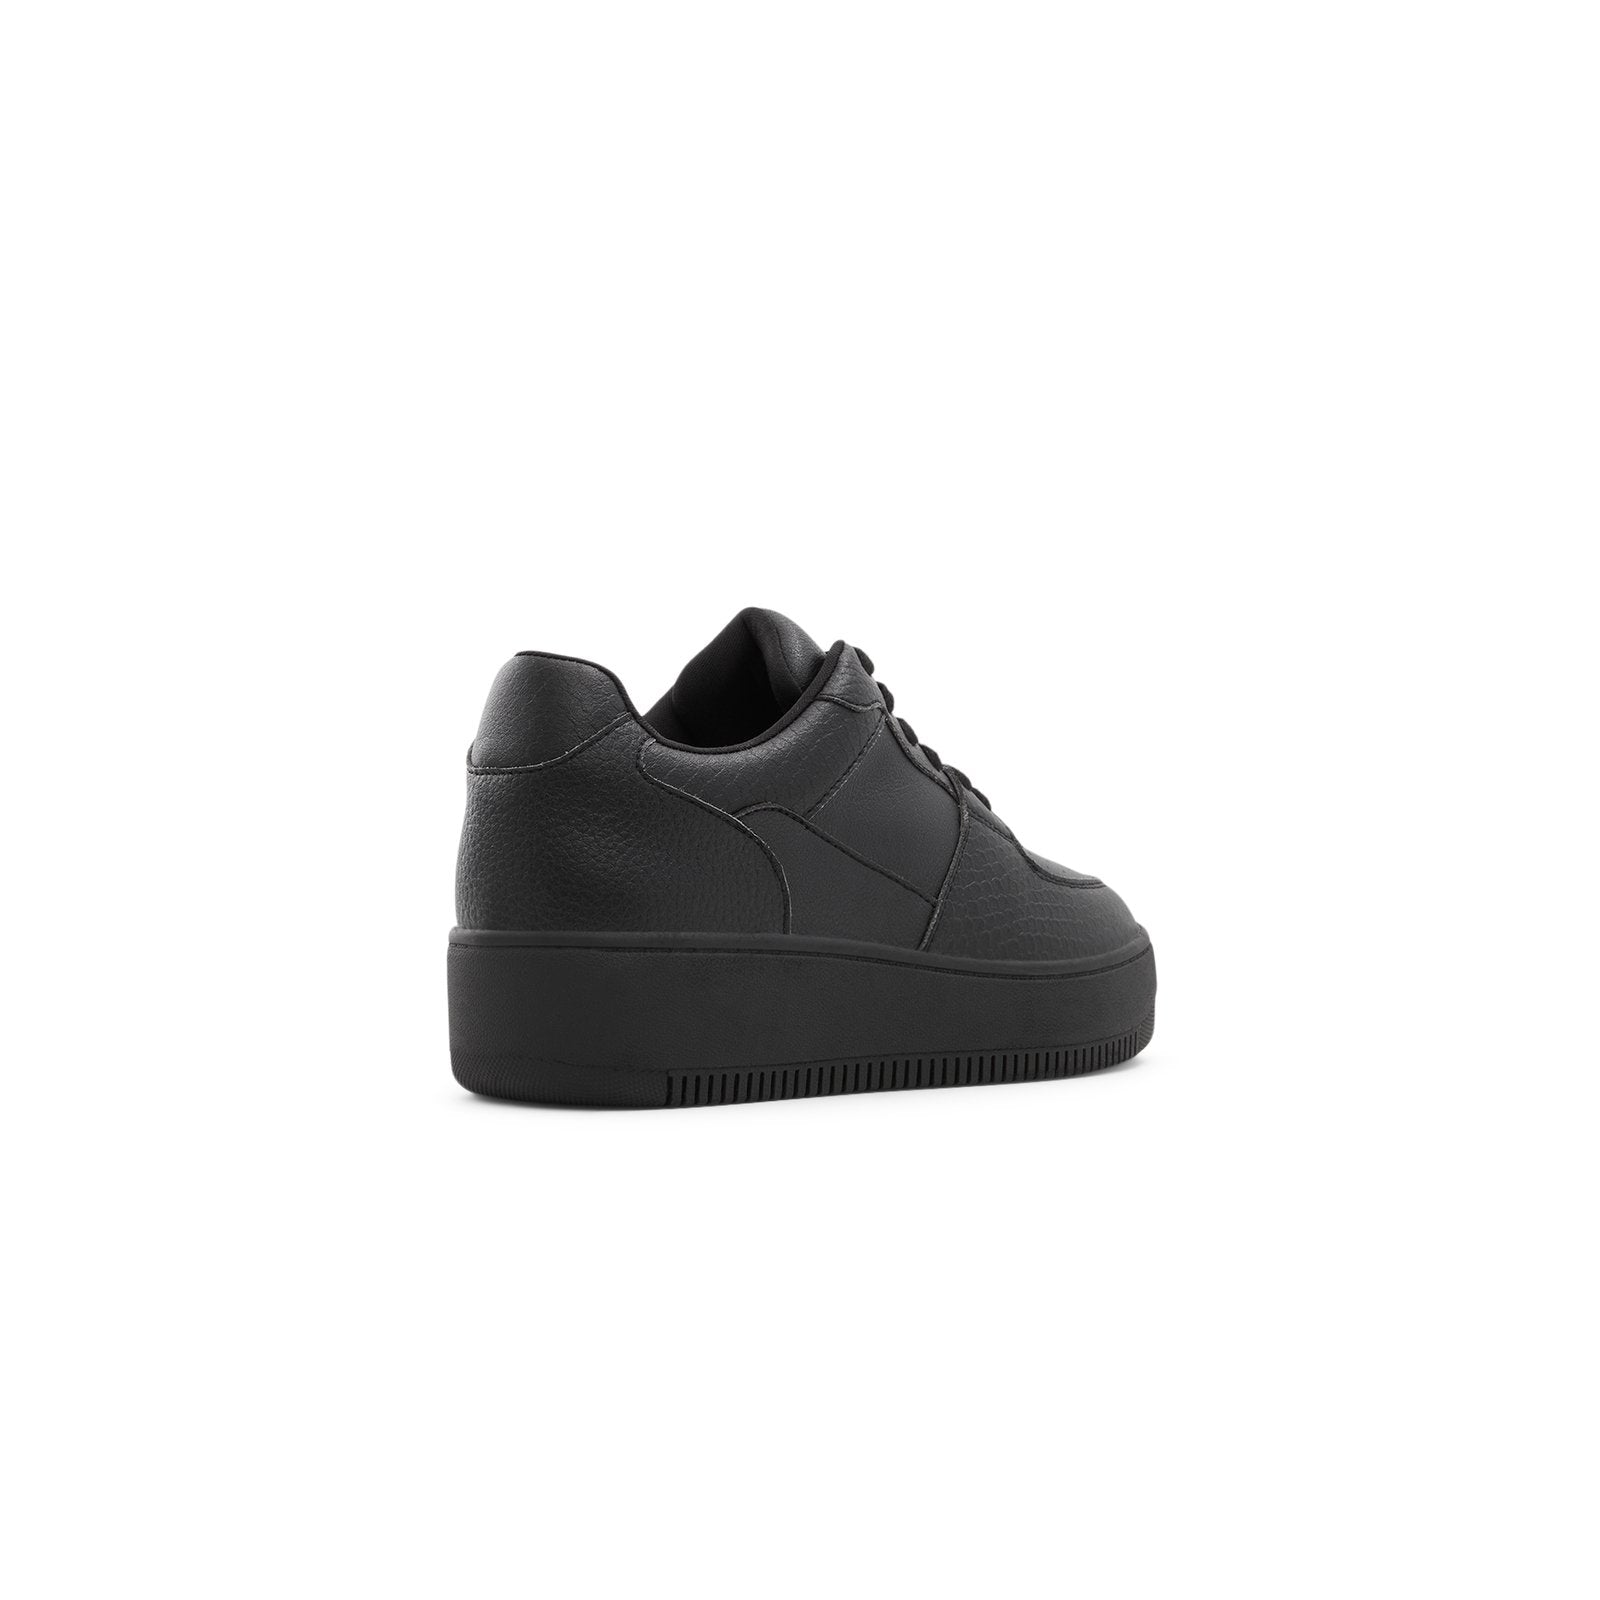 Fresh / Sneakers Women Shoes - Black - CALL IT SPRING KSA